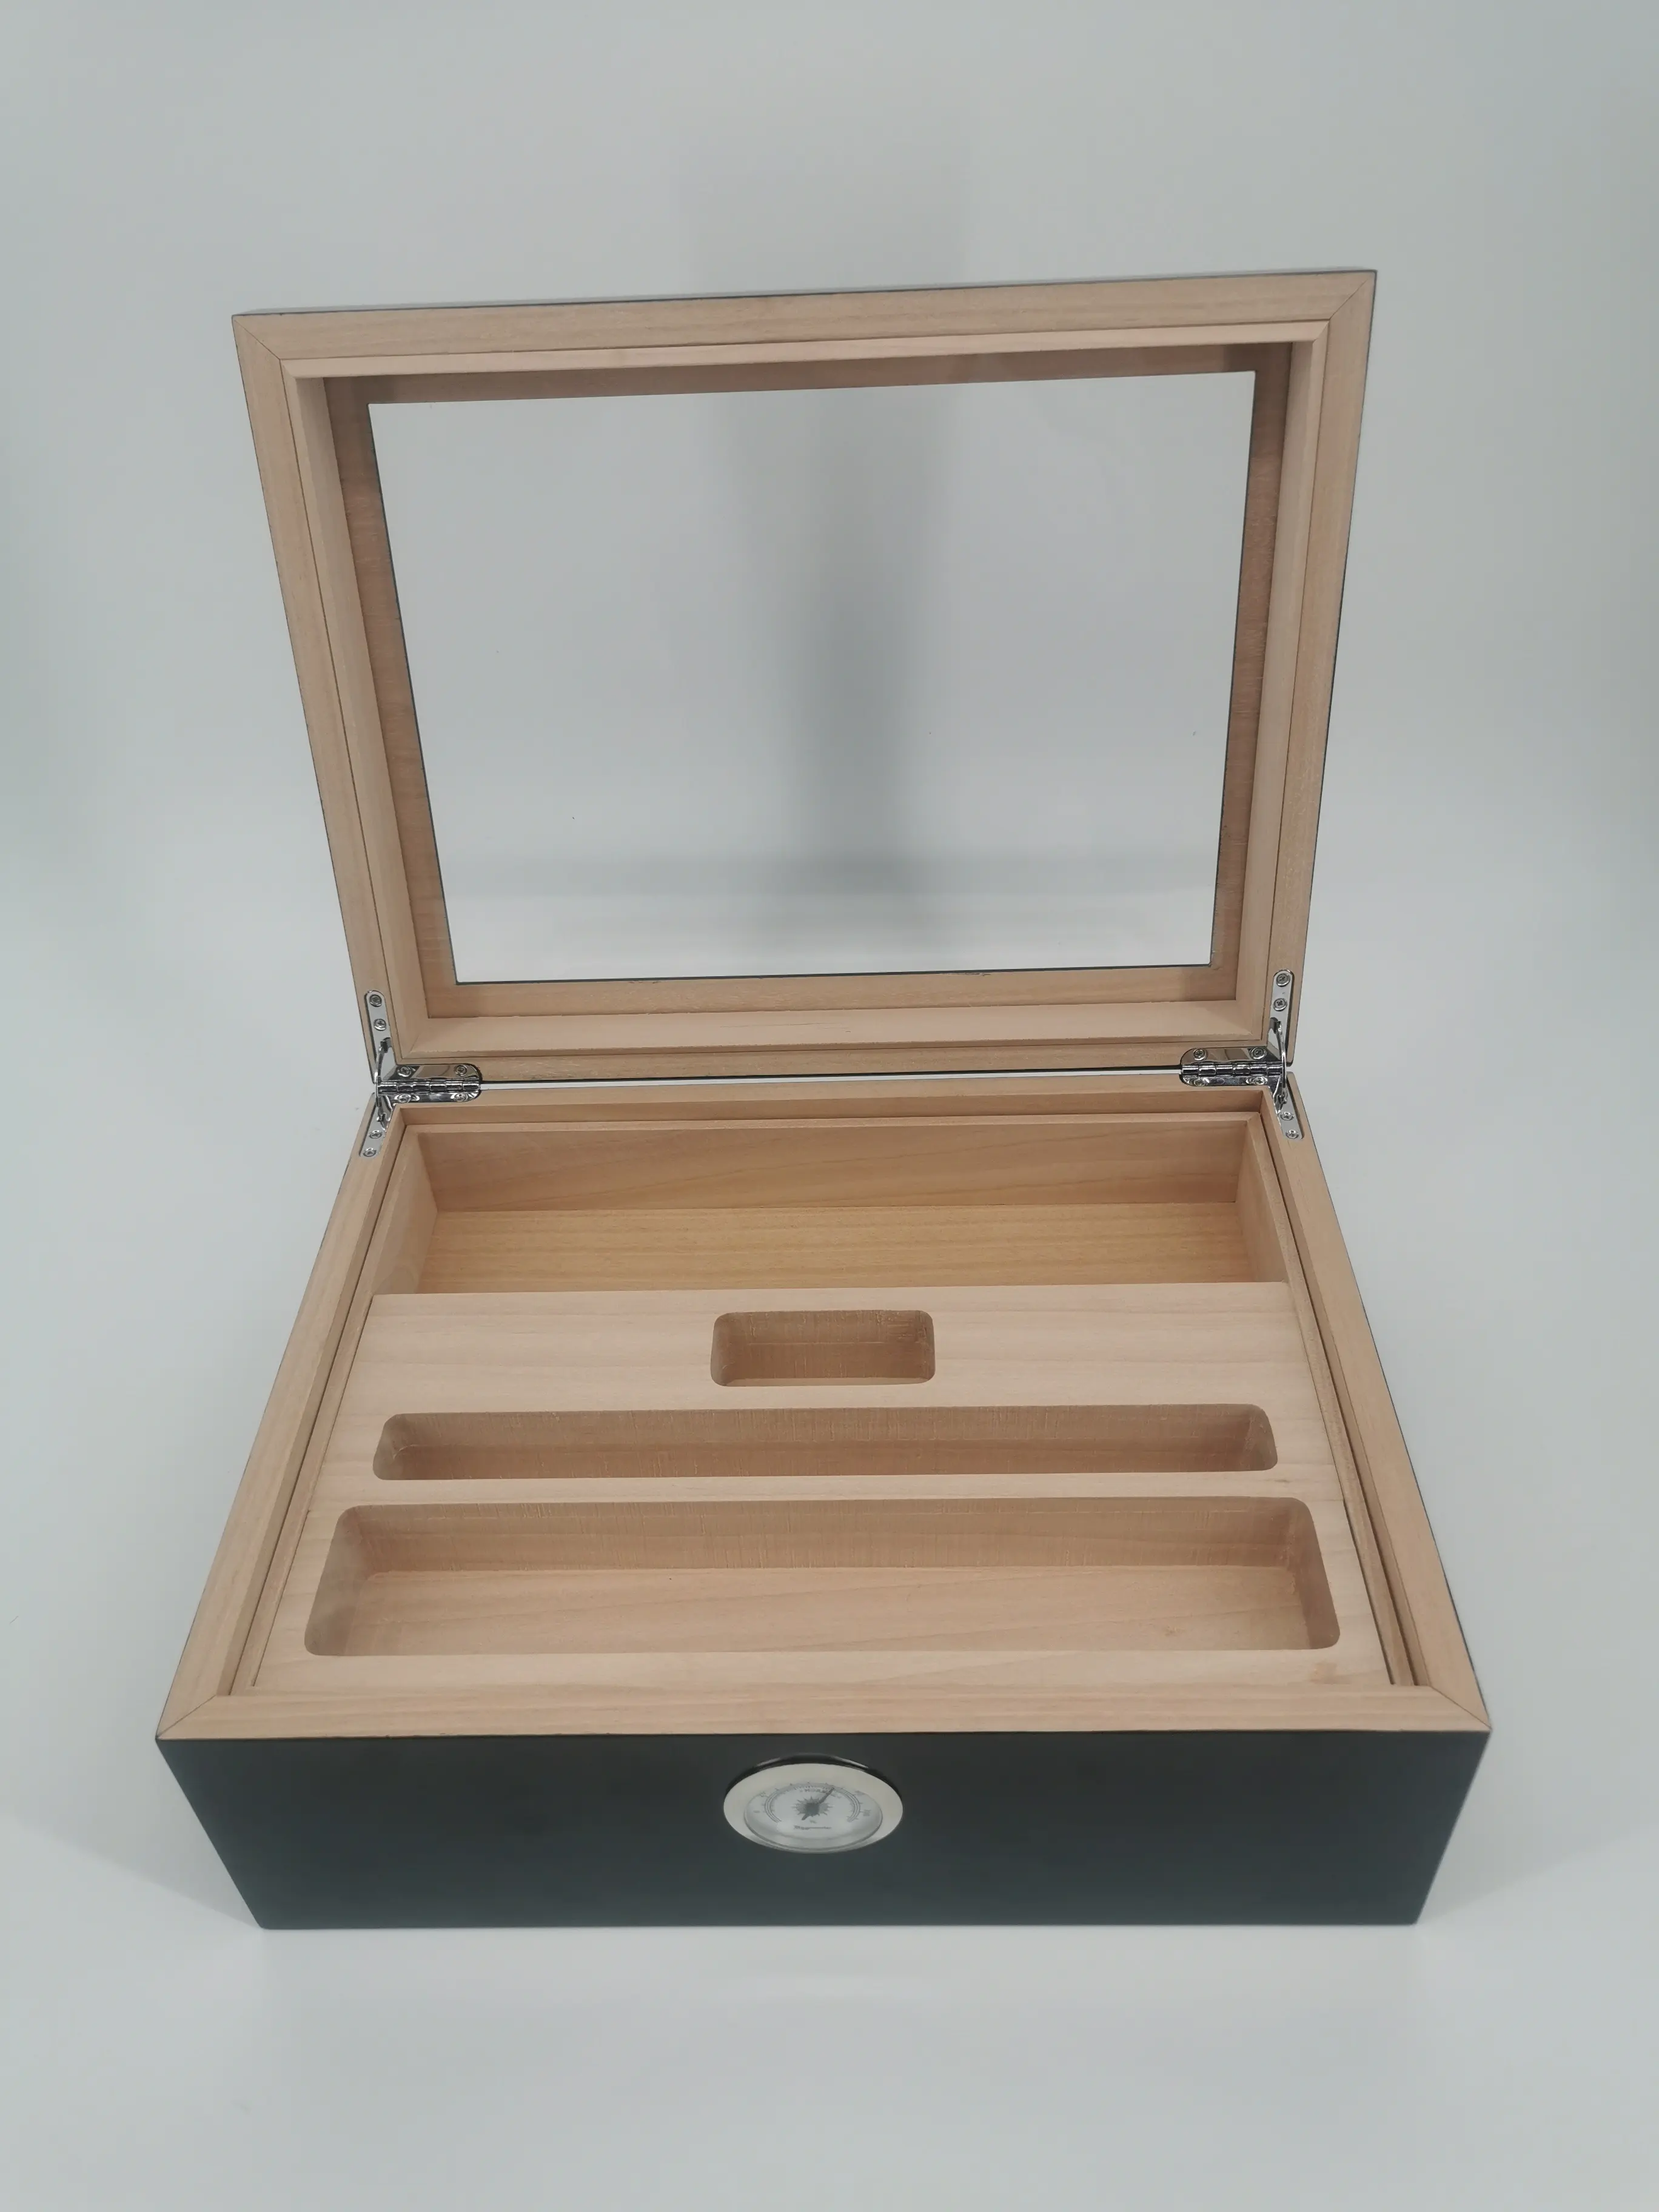 Solid Wood Cigar Humidor Box Case Wooden Cigar Humidor